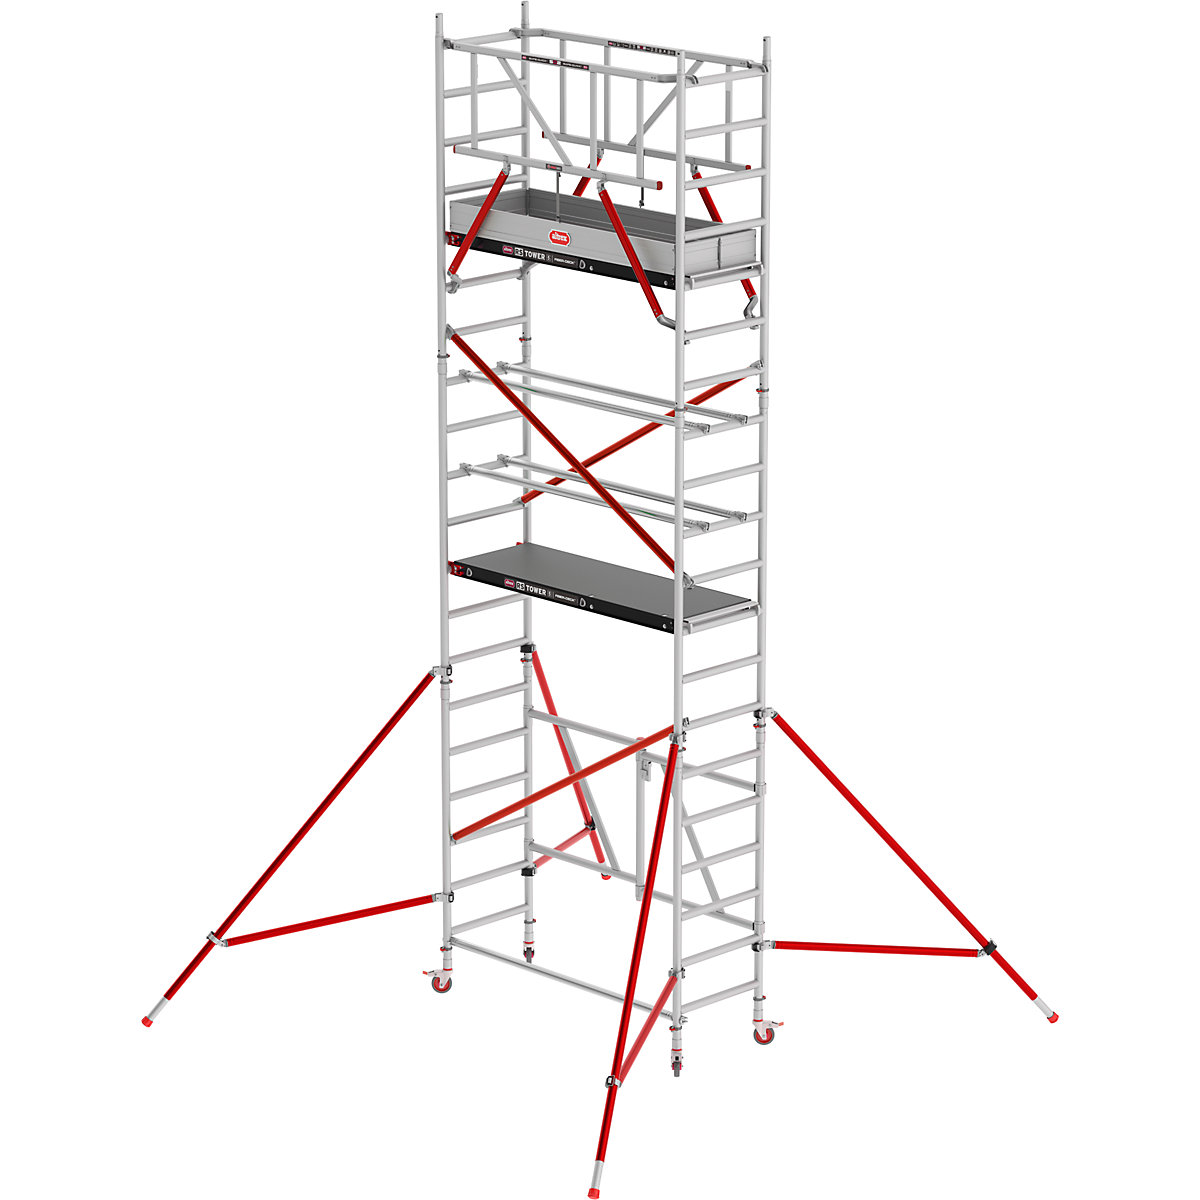 Notranji oder RS TOWER 54 – Altrex, lesena ploščad, delovna višina 6,80 m